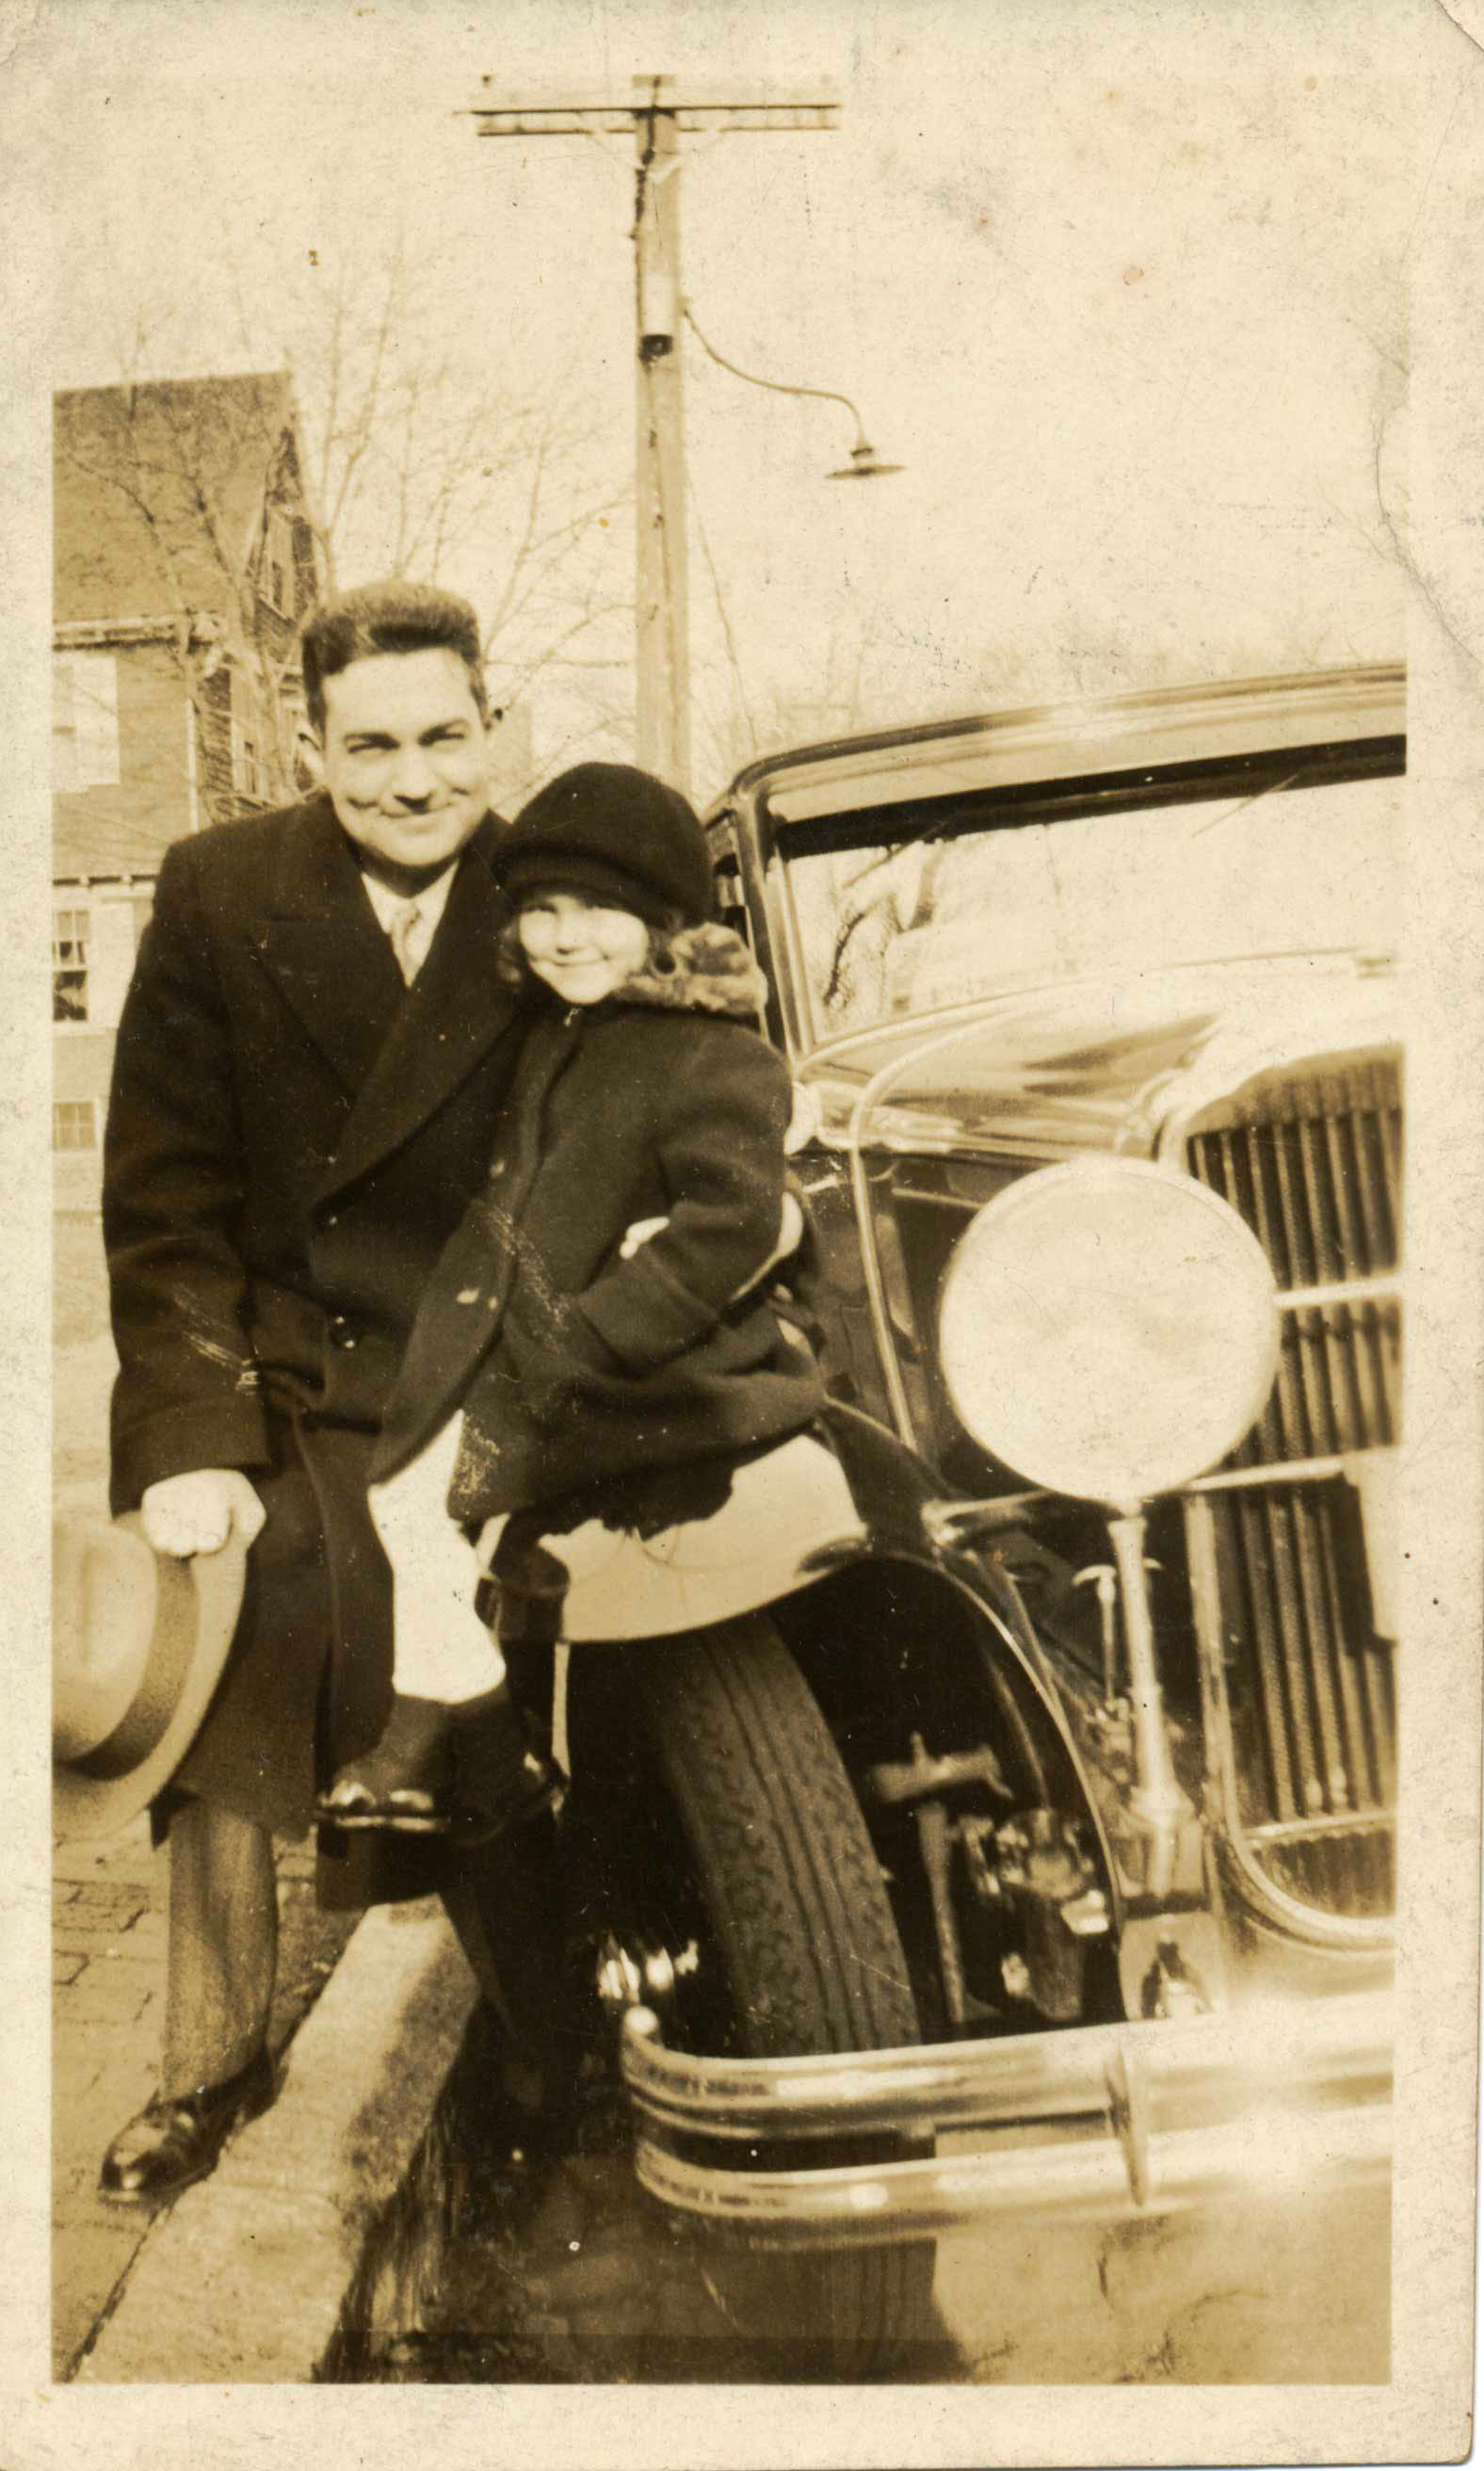 Philip with Arlene beside a car